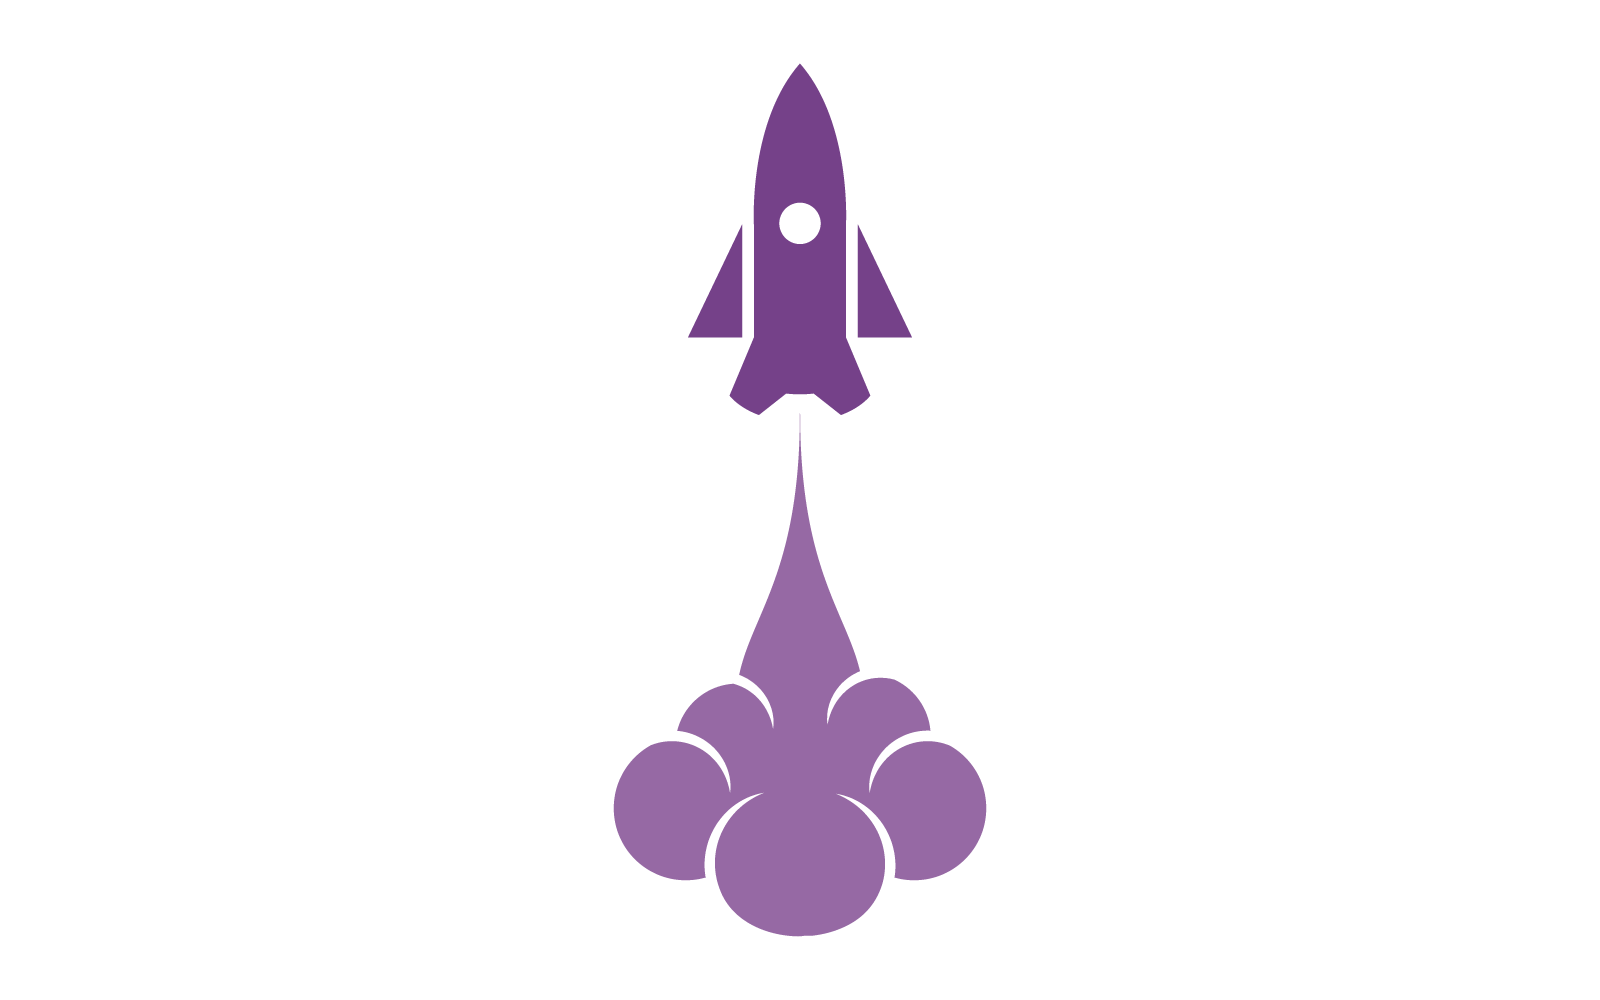 Rocket ilustration logo vector icon design template